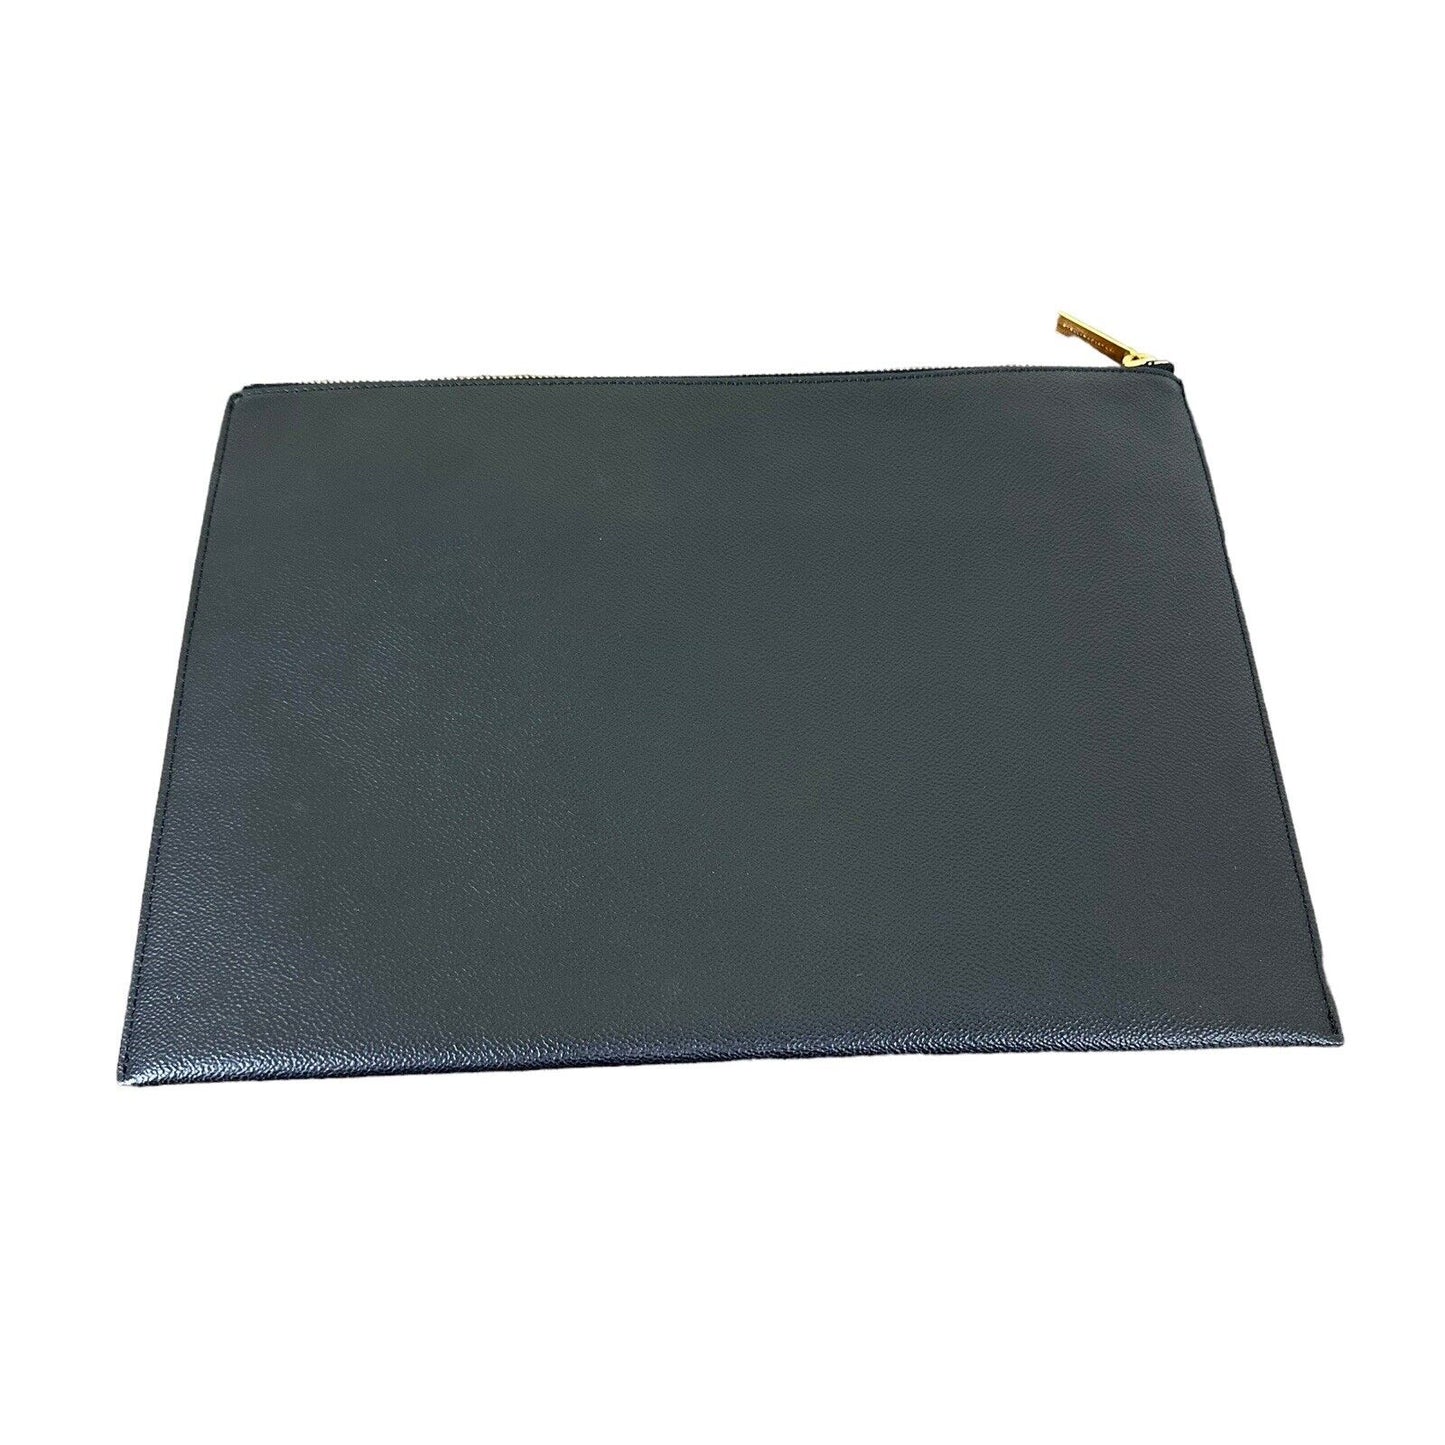 Stella McCartney Super Heroes Faux Leather Clutch Bag Authenticated w/ COA Black